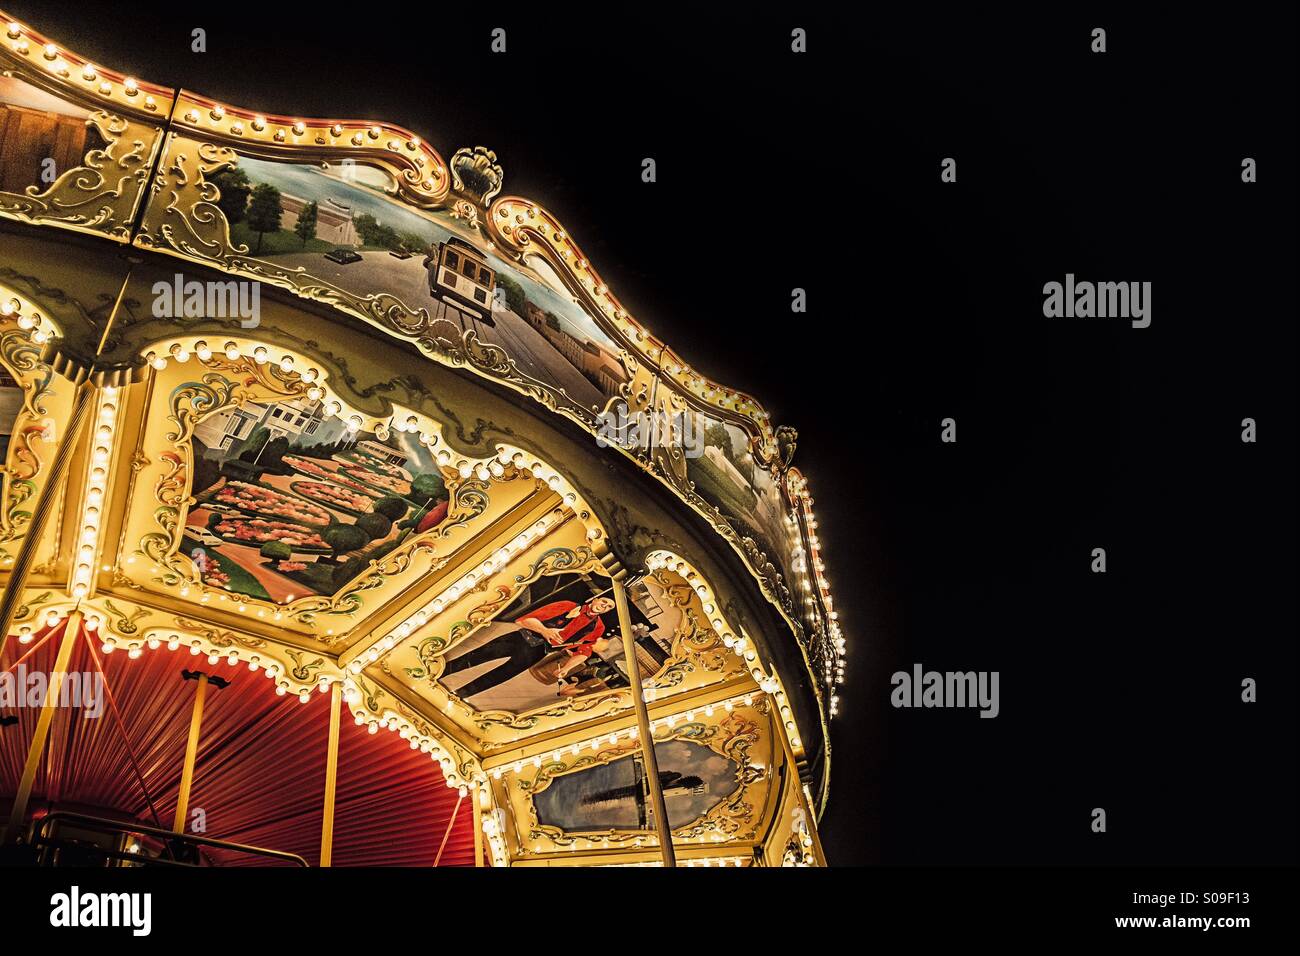 Pier 39 carousel at night Stock Photo